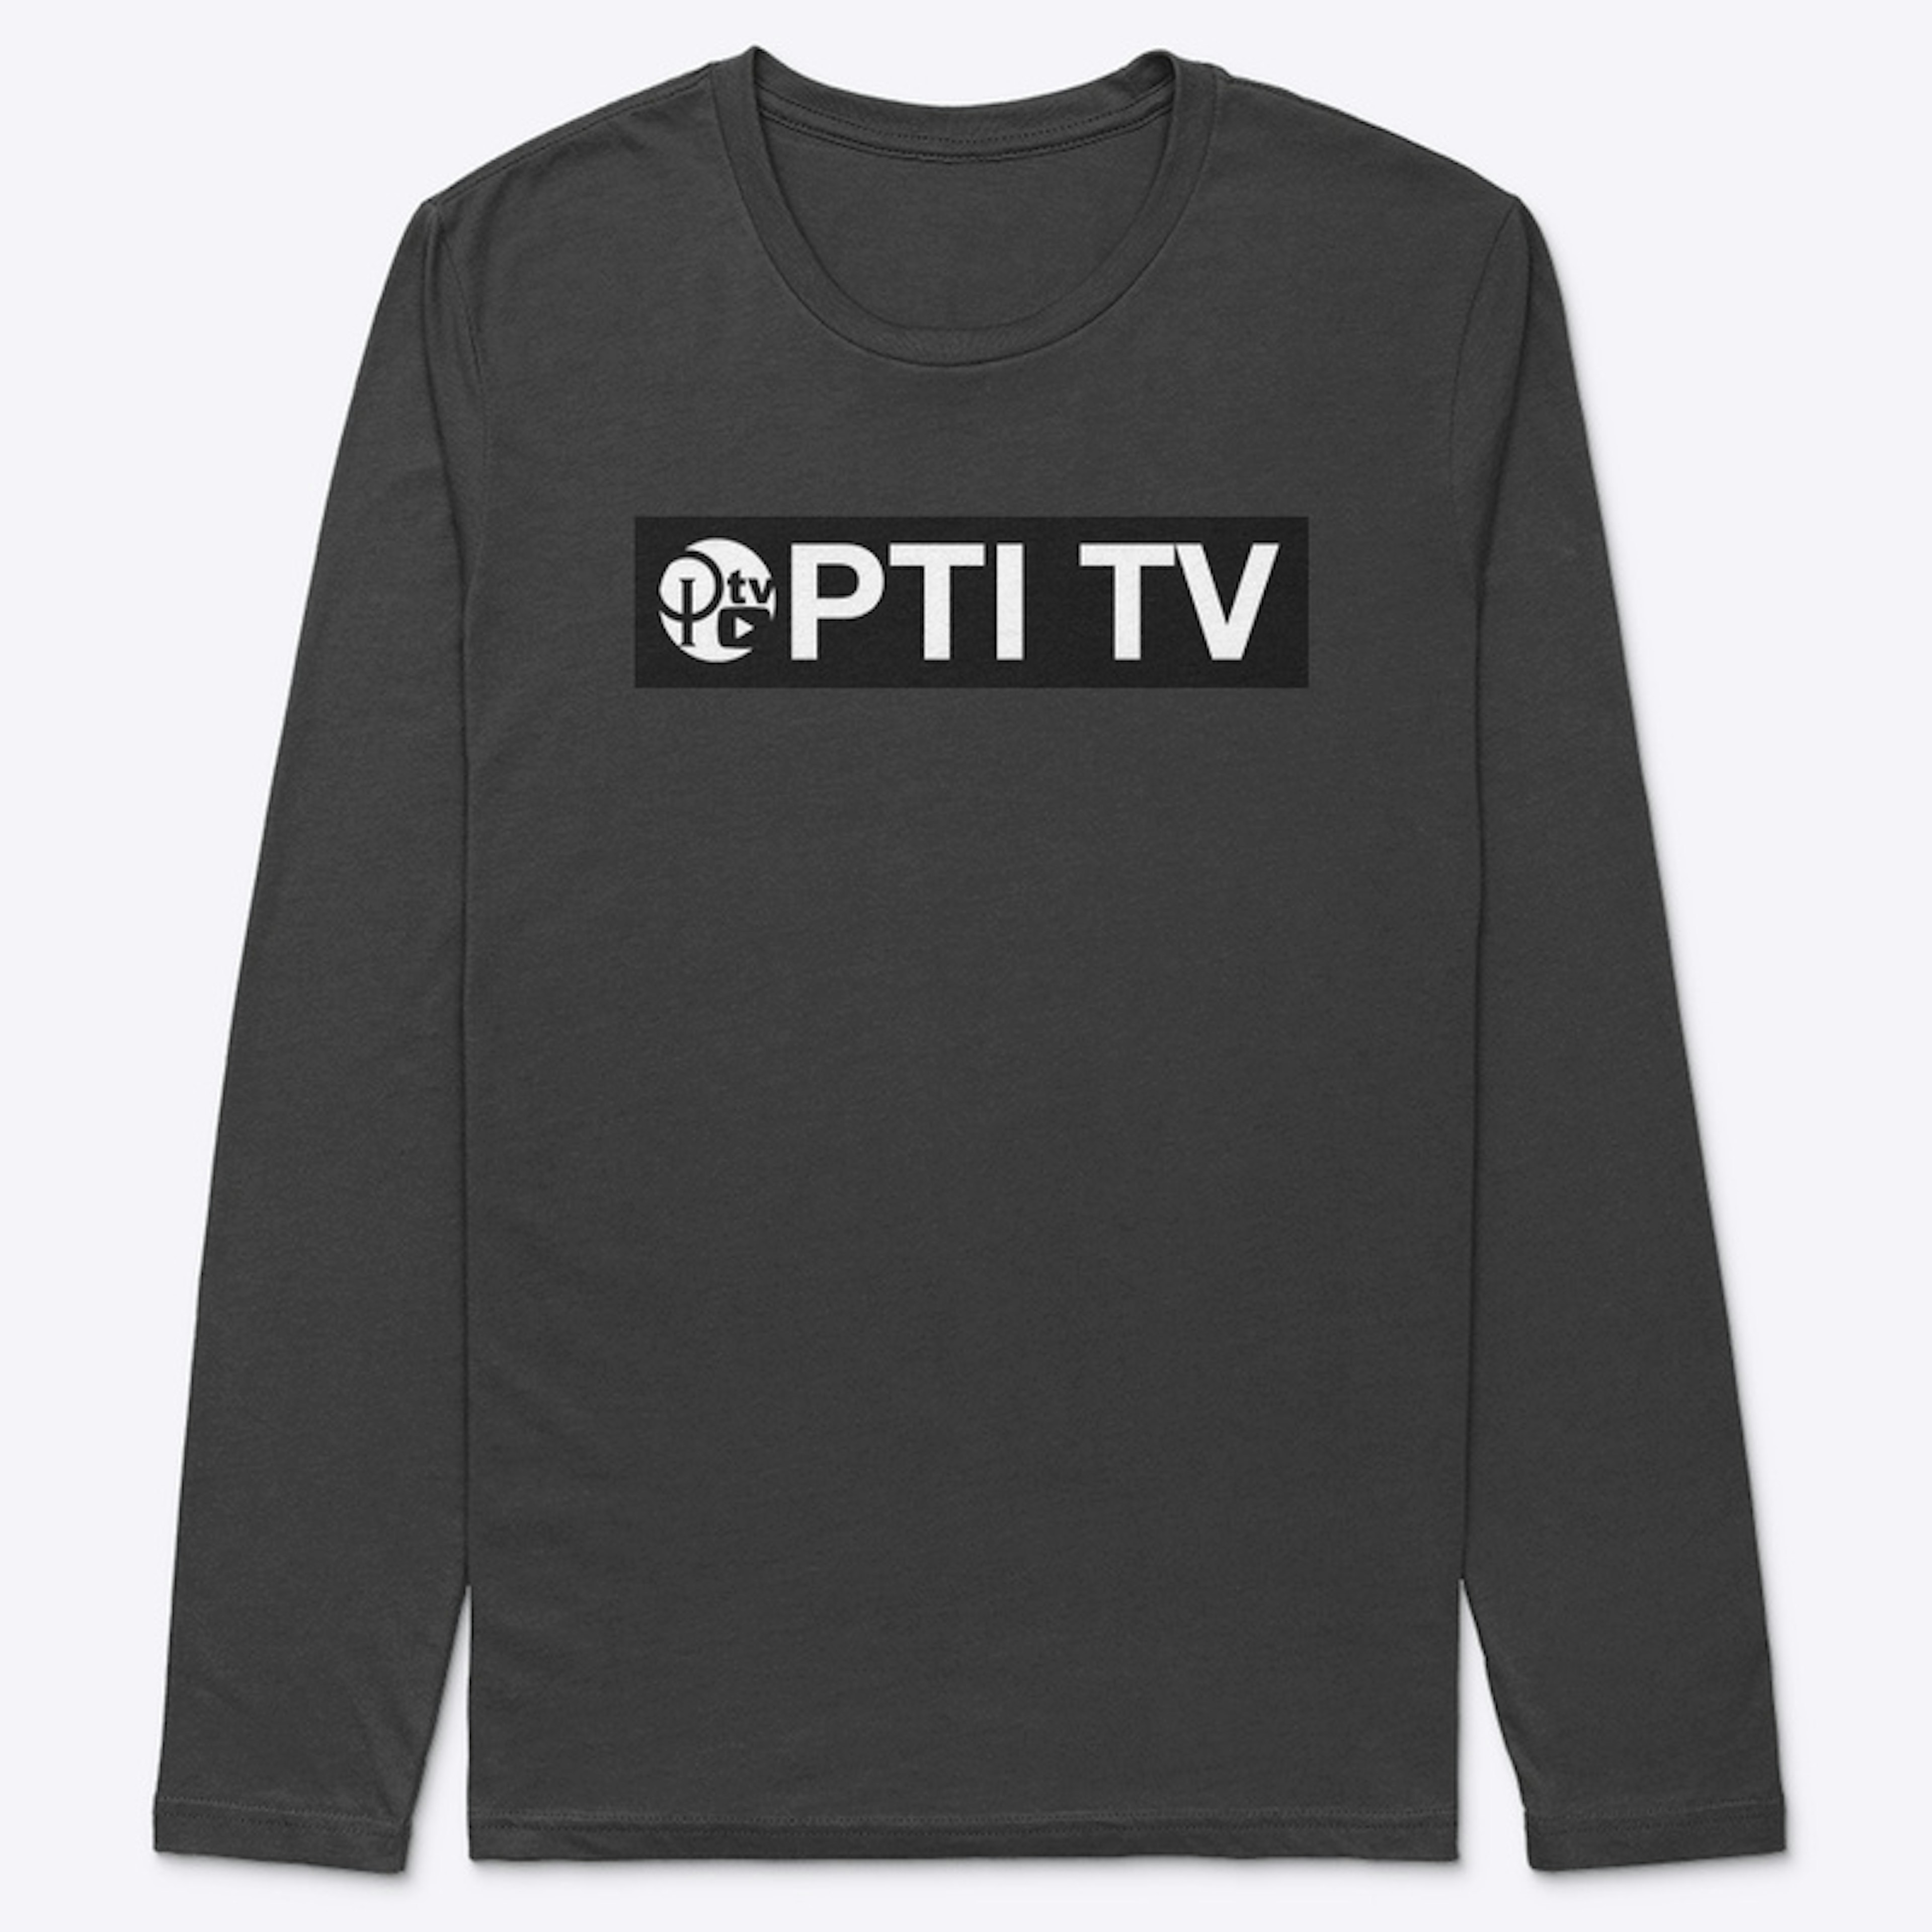 Opti TV Supporter Shirt